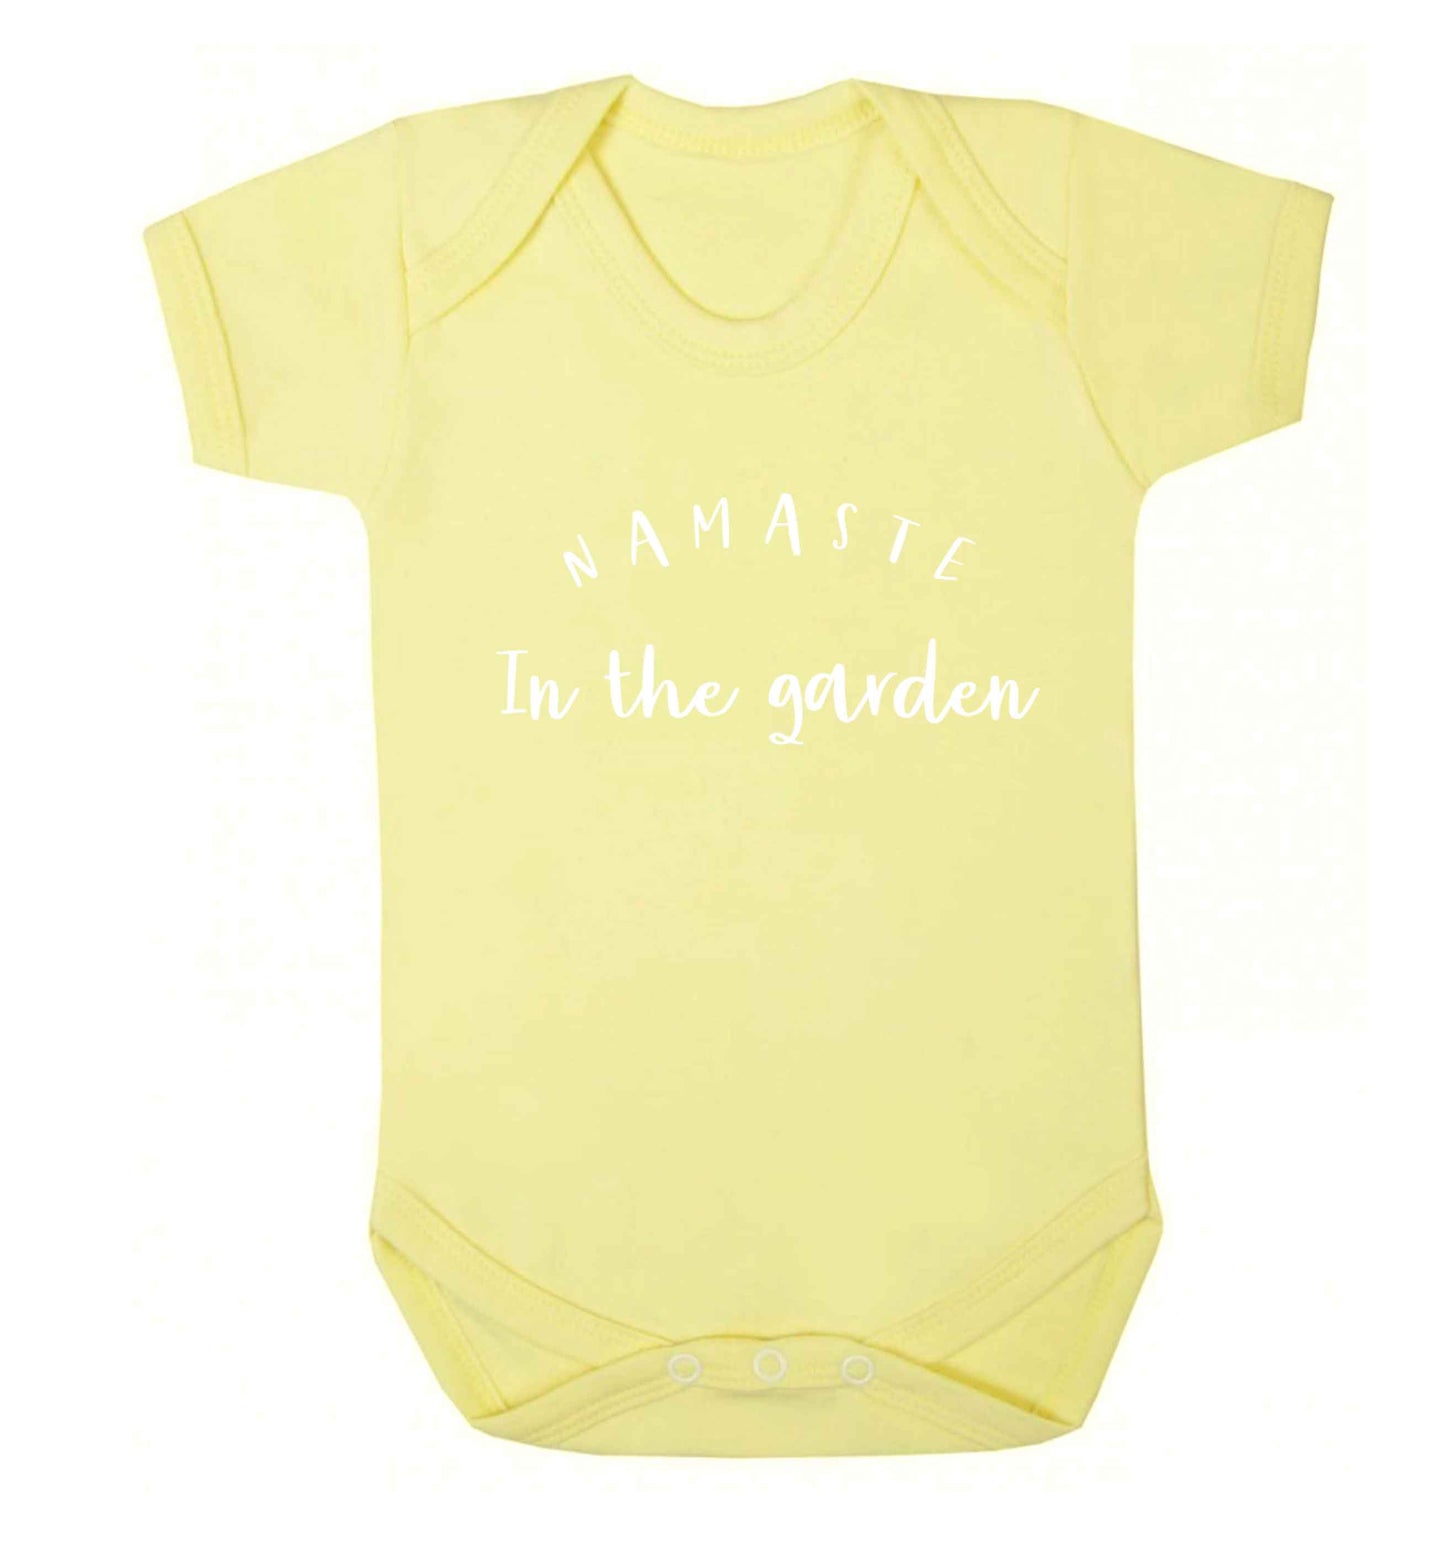 Namaste in the garden Baby Vest pale yellow 18-24 months